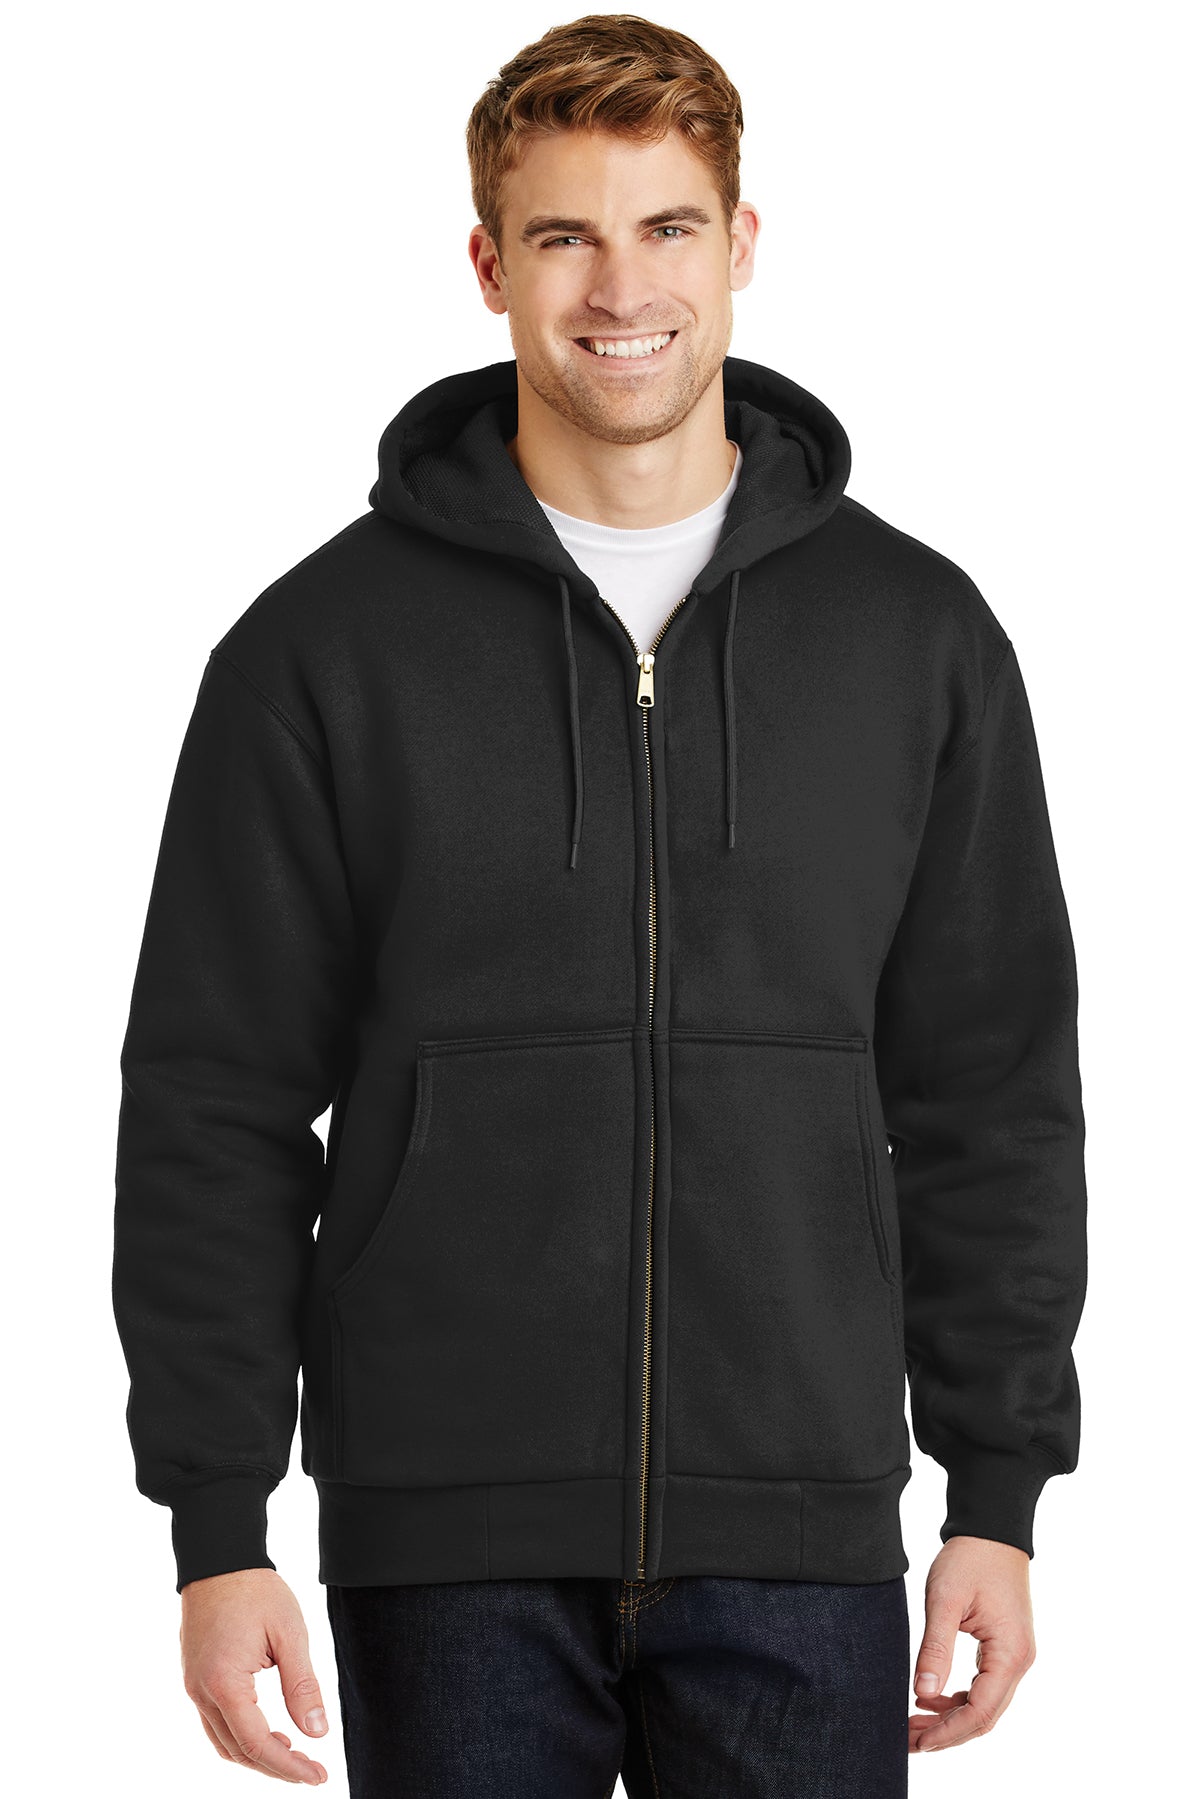 Buy black CornerStone Heavyweight Full-Zip Hooded Sweatshirt with Thermal Lining